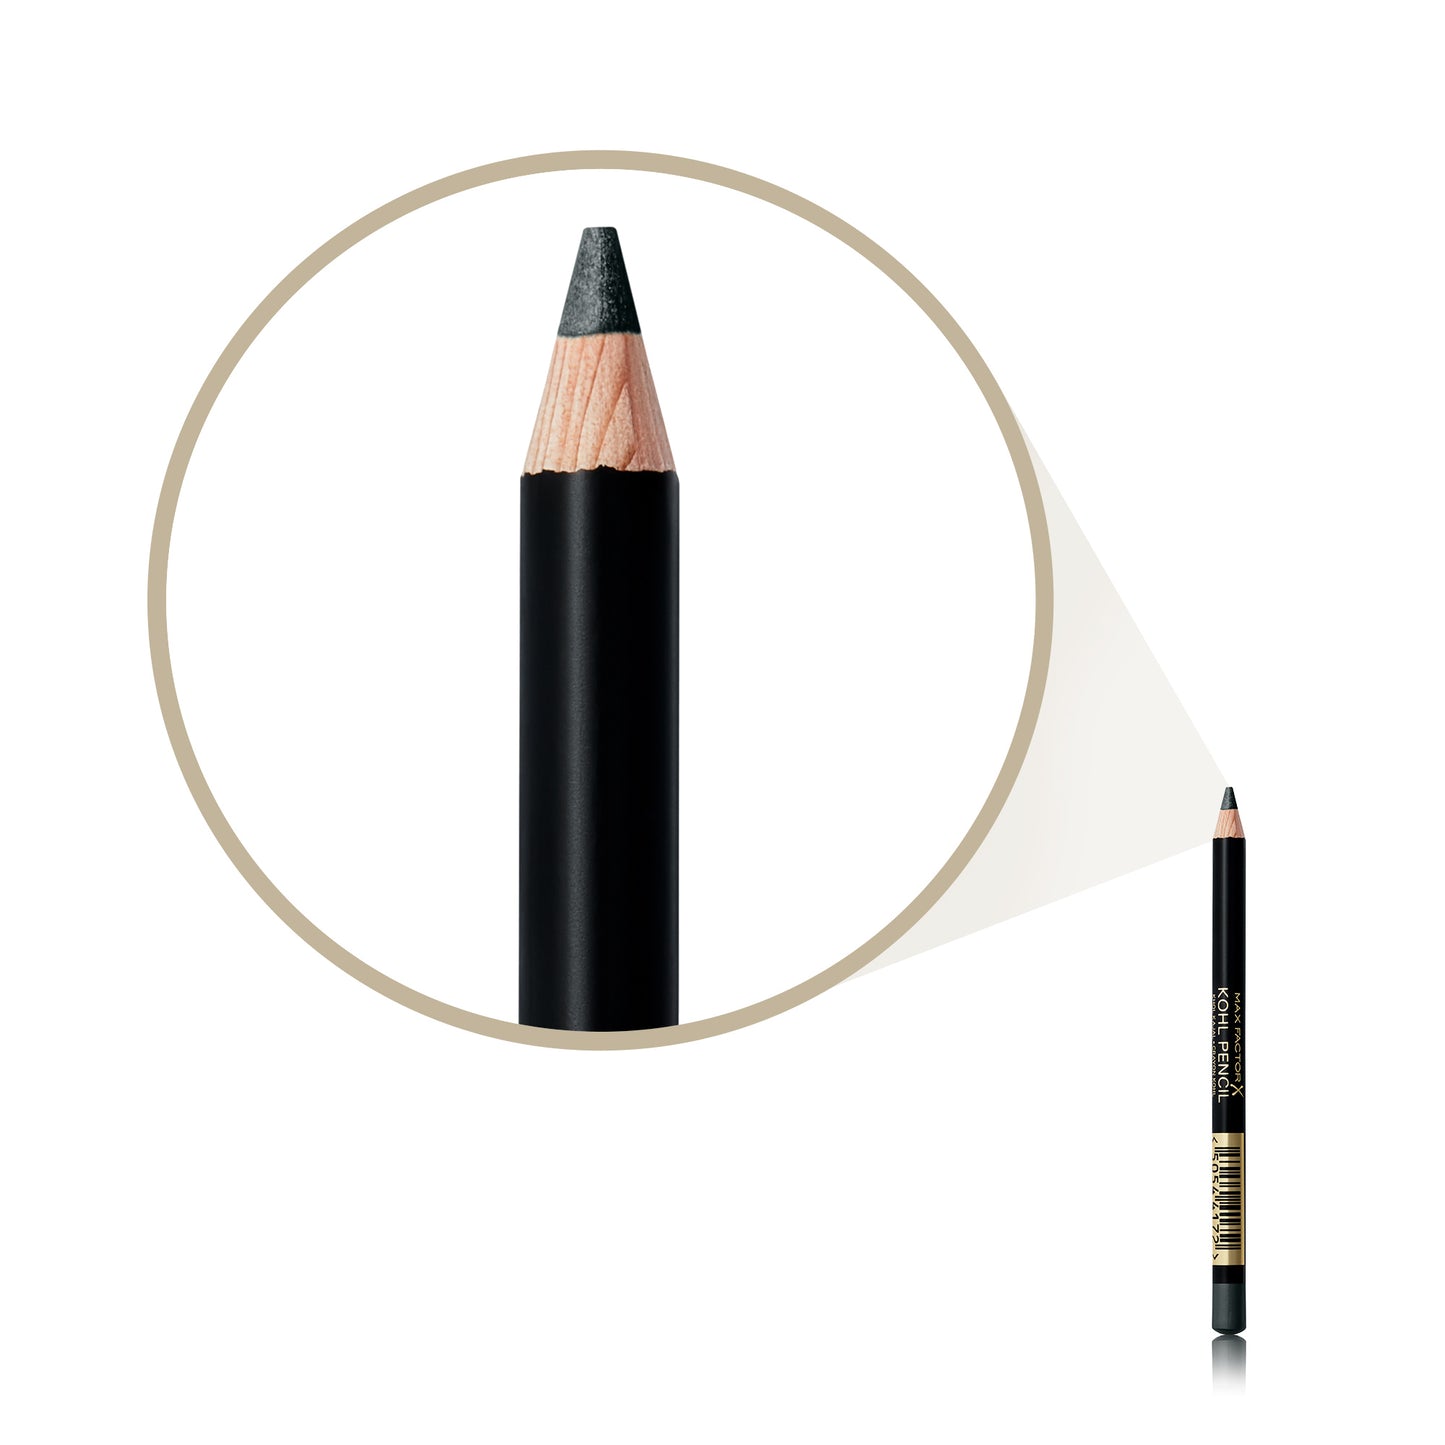 Max Factor - Matita Occhi Kohl Eyeliner Pencil - Kajal con Texture Ultra Morbida - 050 Charcoal Grey - 1,2 g